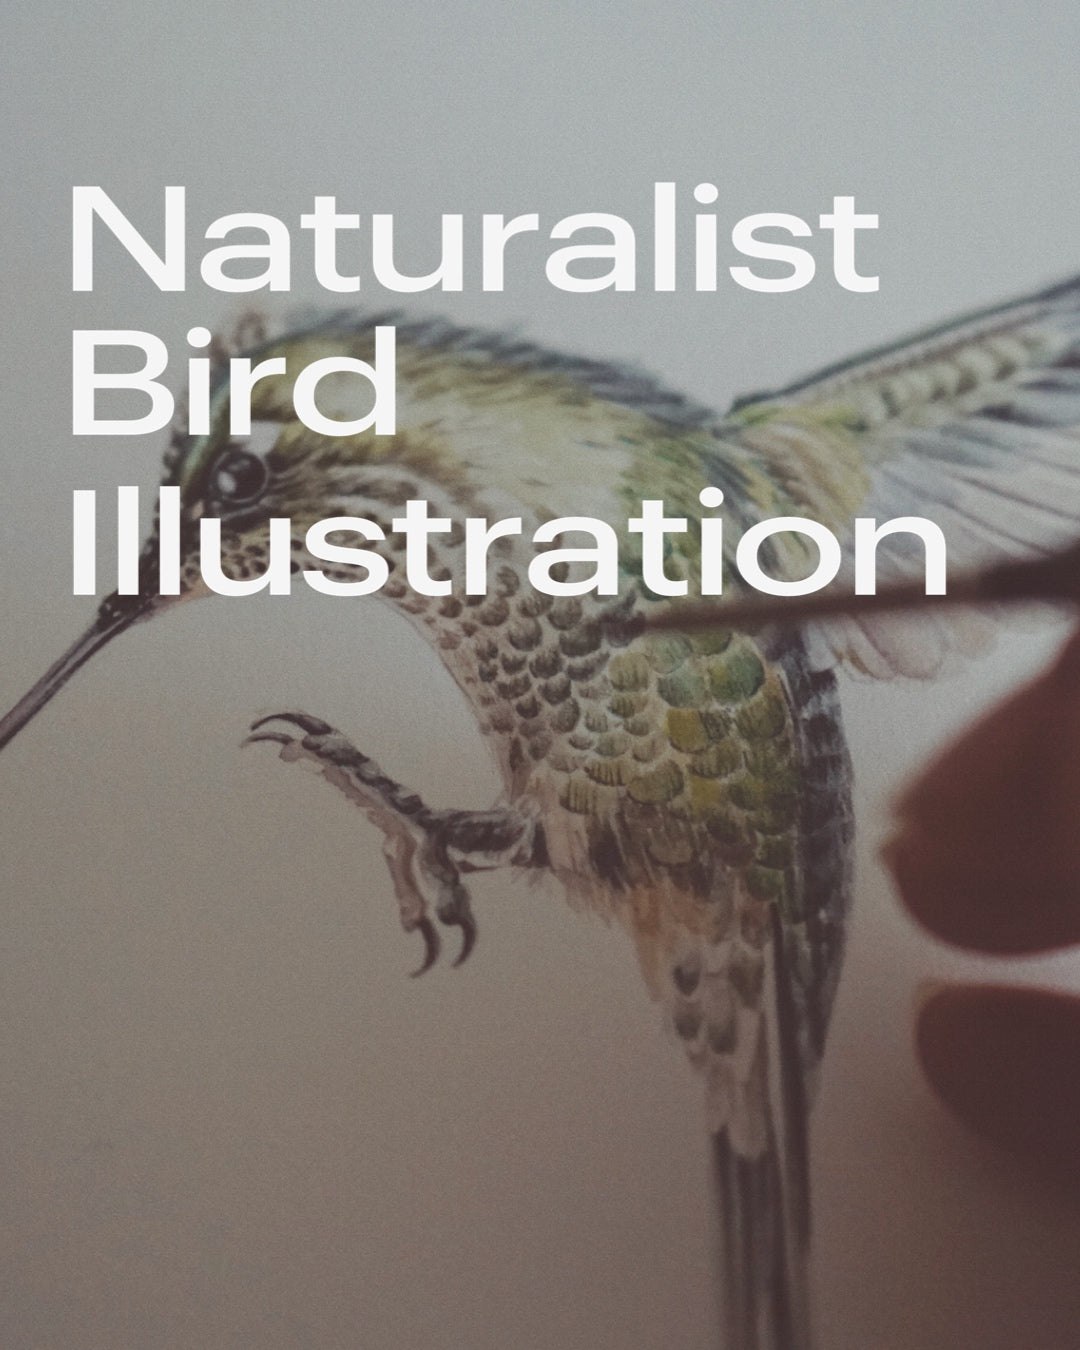 naturalist-bird-illustration-online-course-antonia-reyes-montealegre-PARAISO